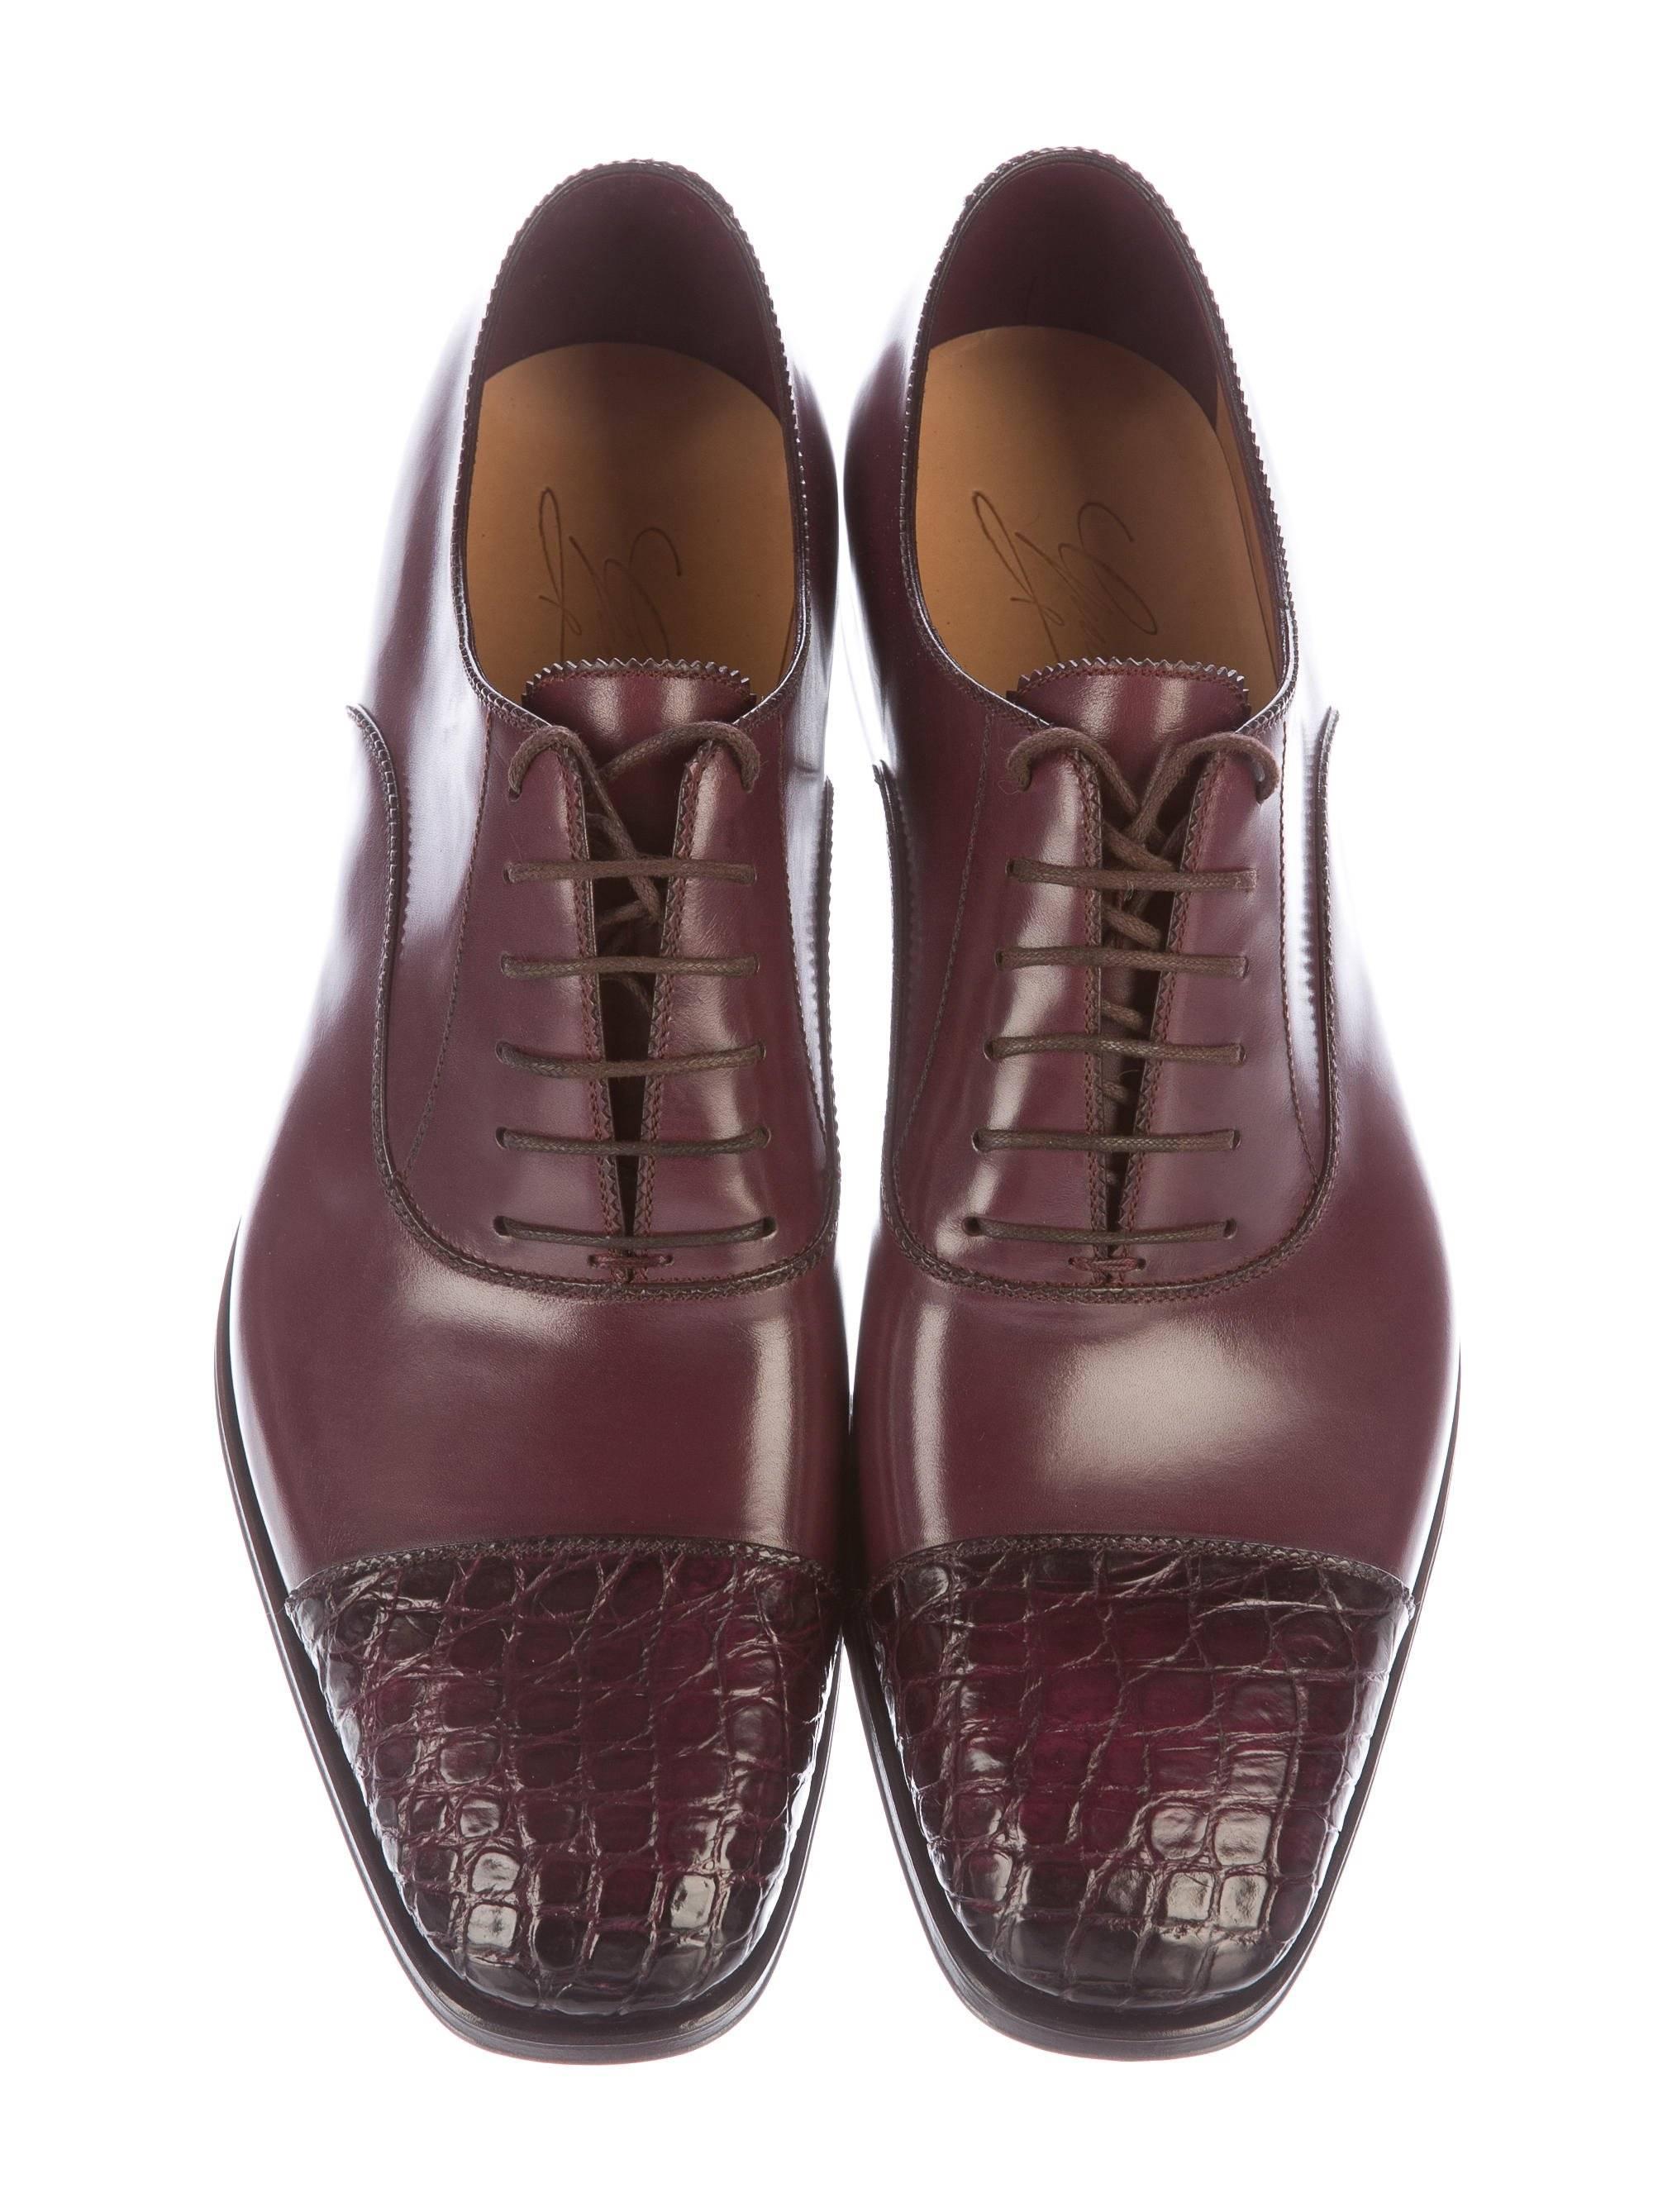 Dark Brown Alligator Men Shoes Size 7-12US #822 Belly Genuine Leather Men's Shoes Shoes Mens Shoes Oxfords & Wingtips 